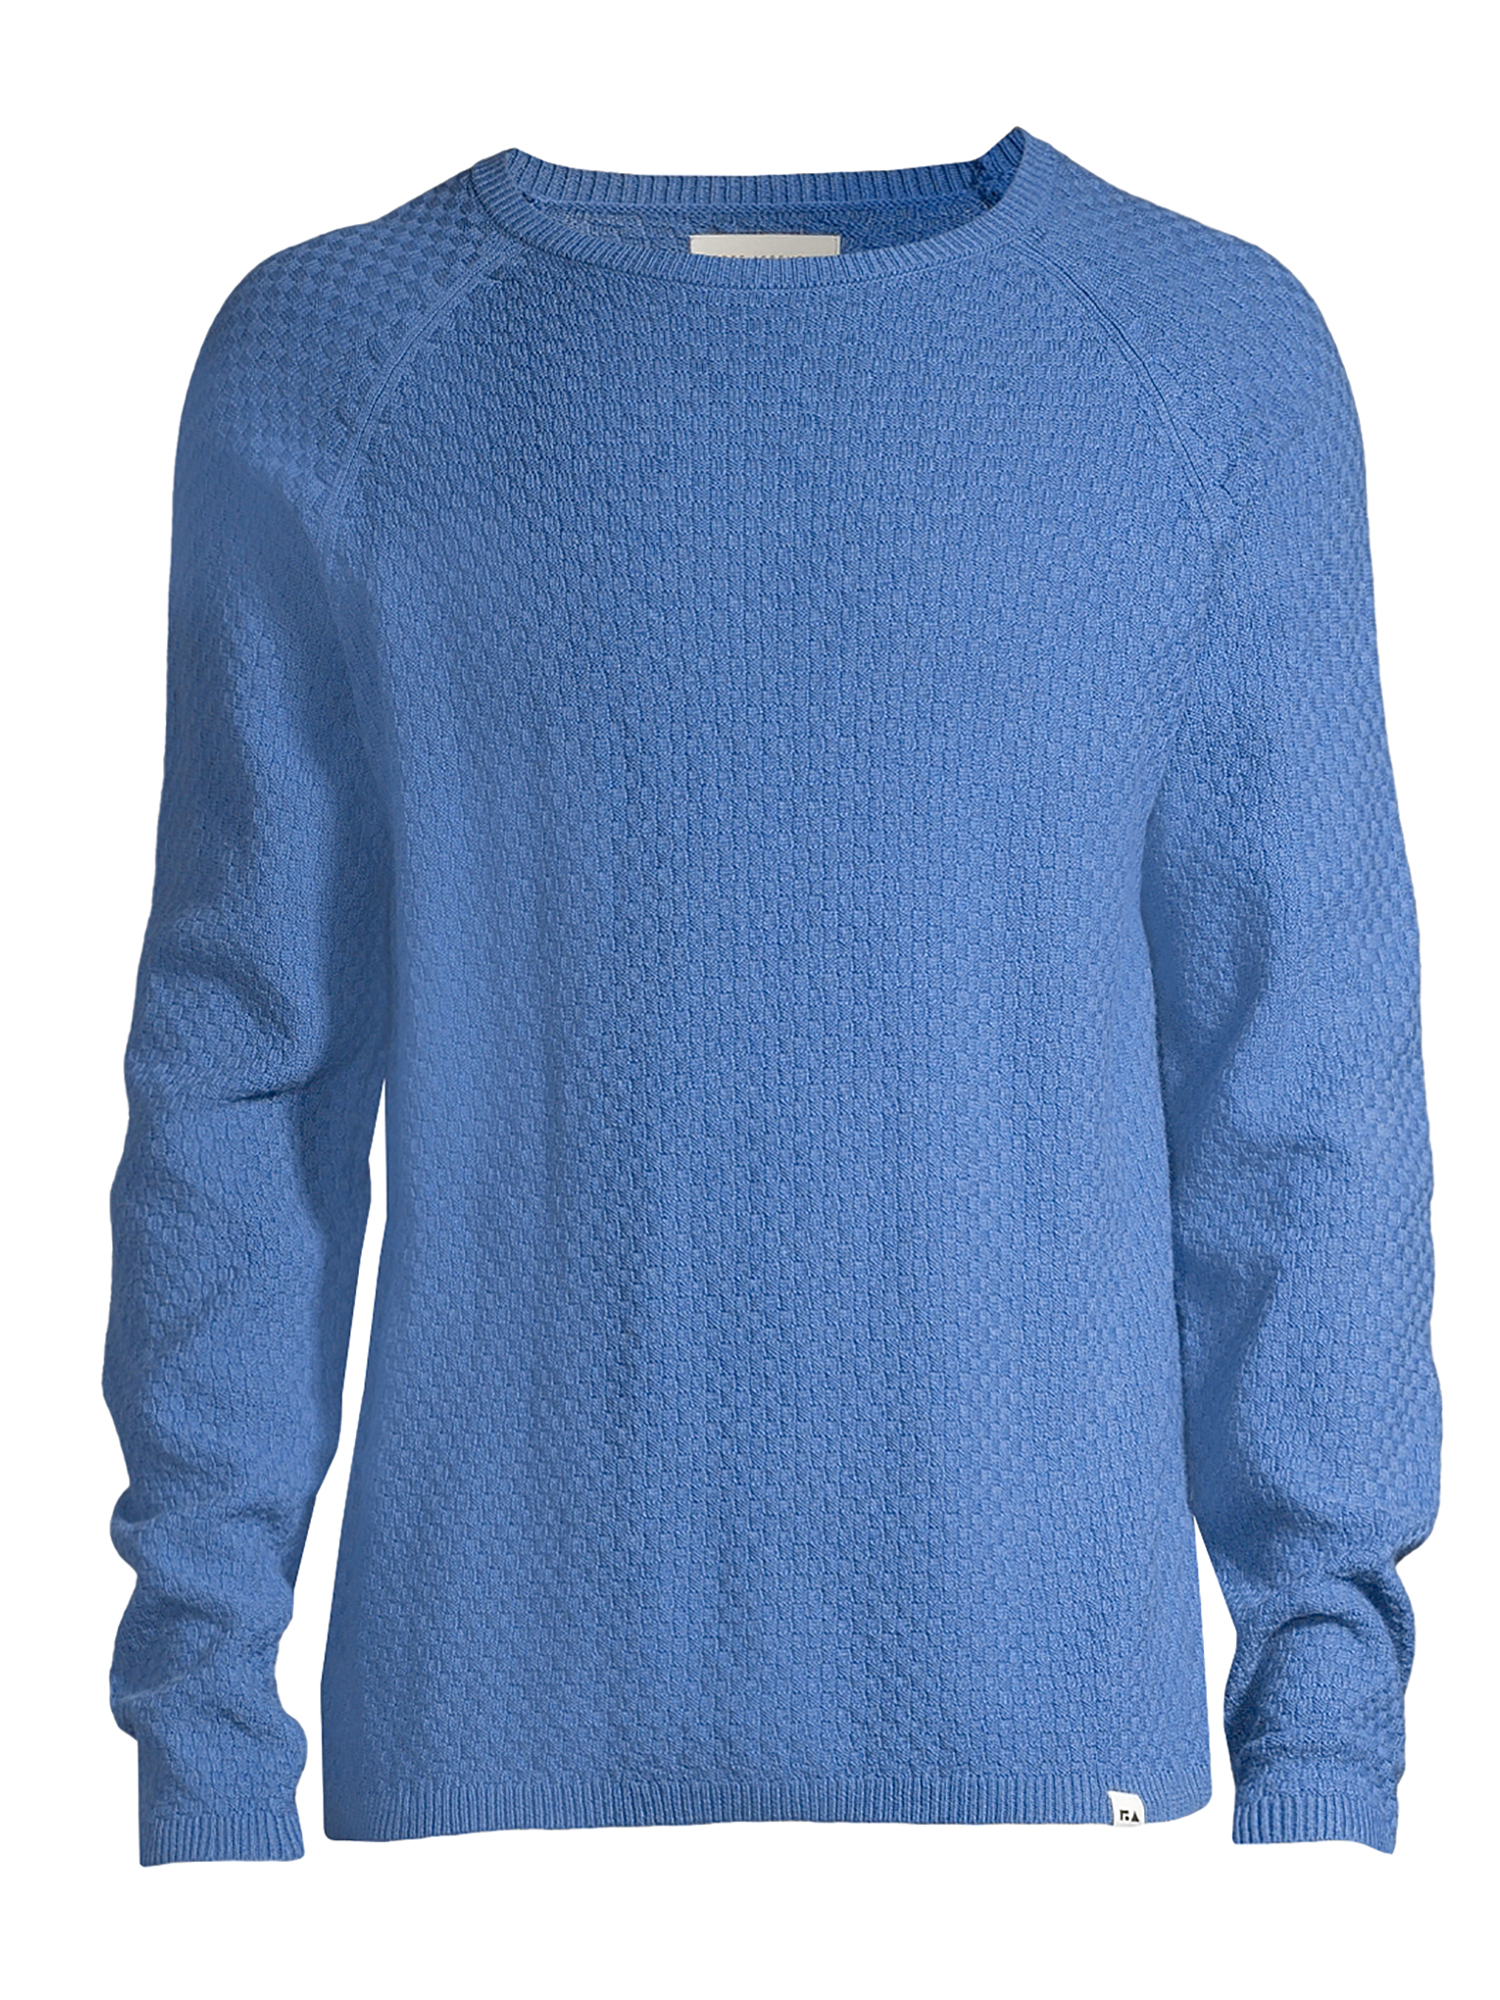 Free Assembly Men's Raglan Sweater - image 5 of 5